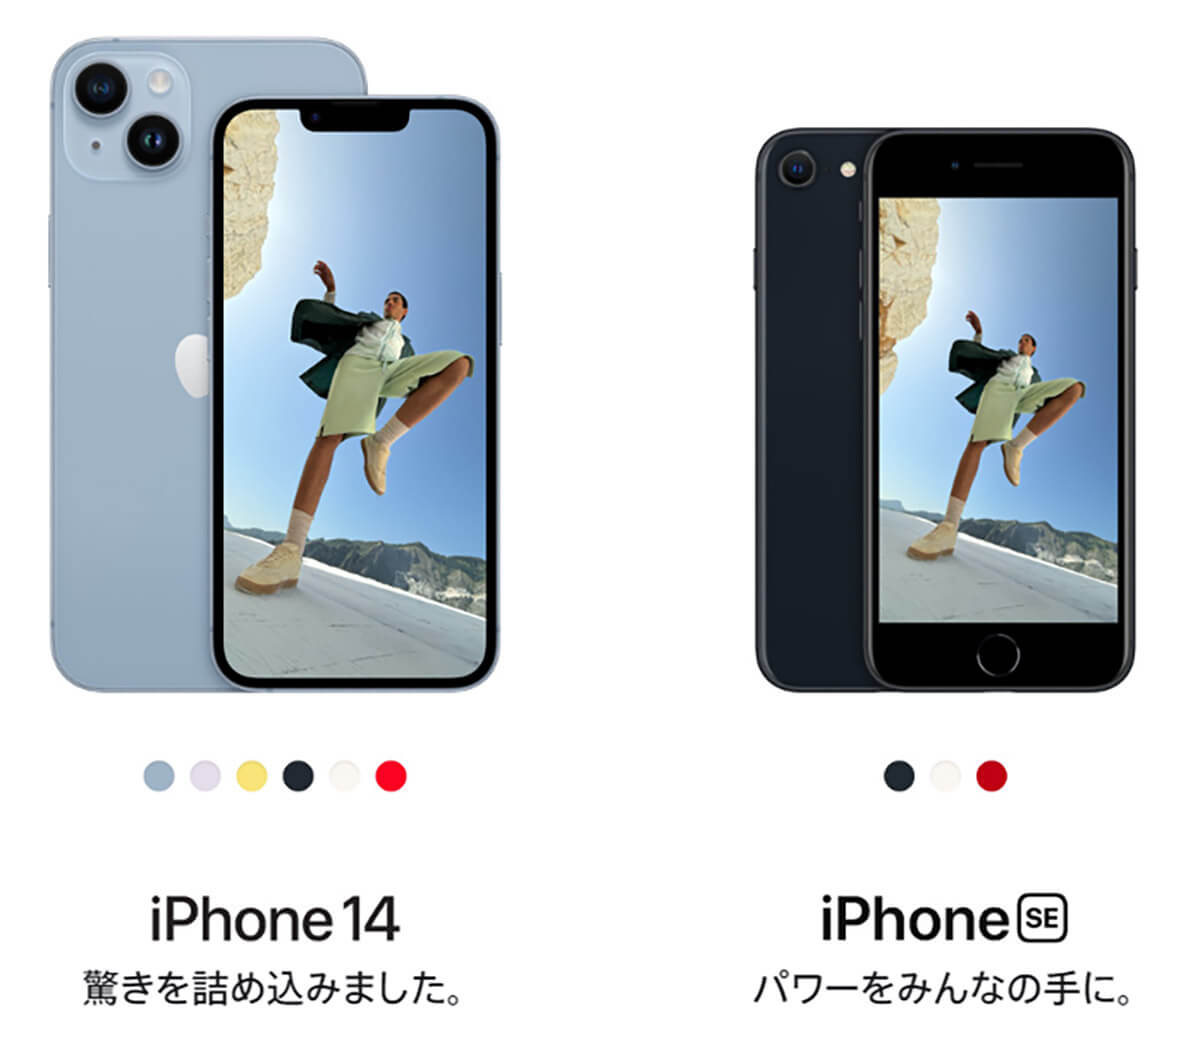 iPhone 14とiPhone SE